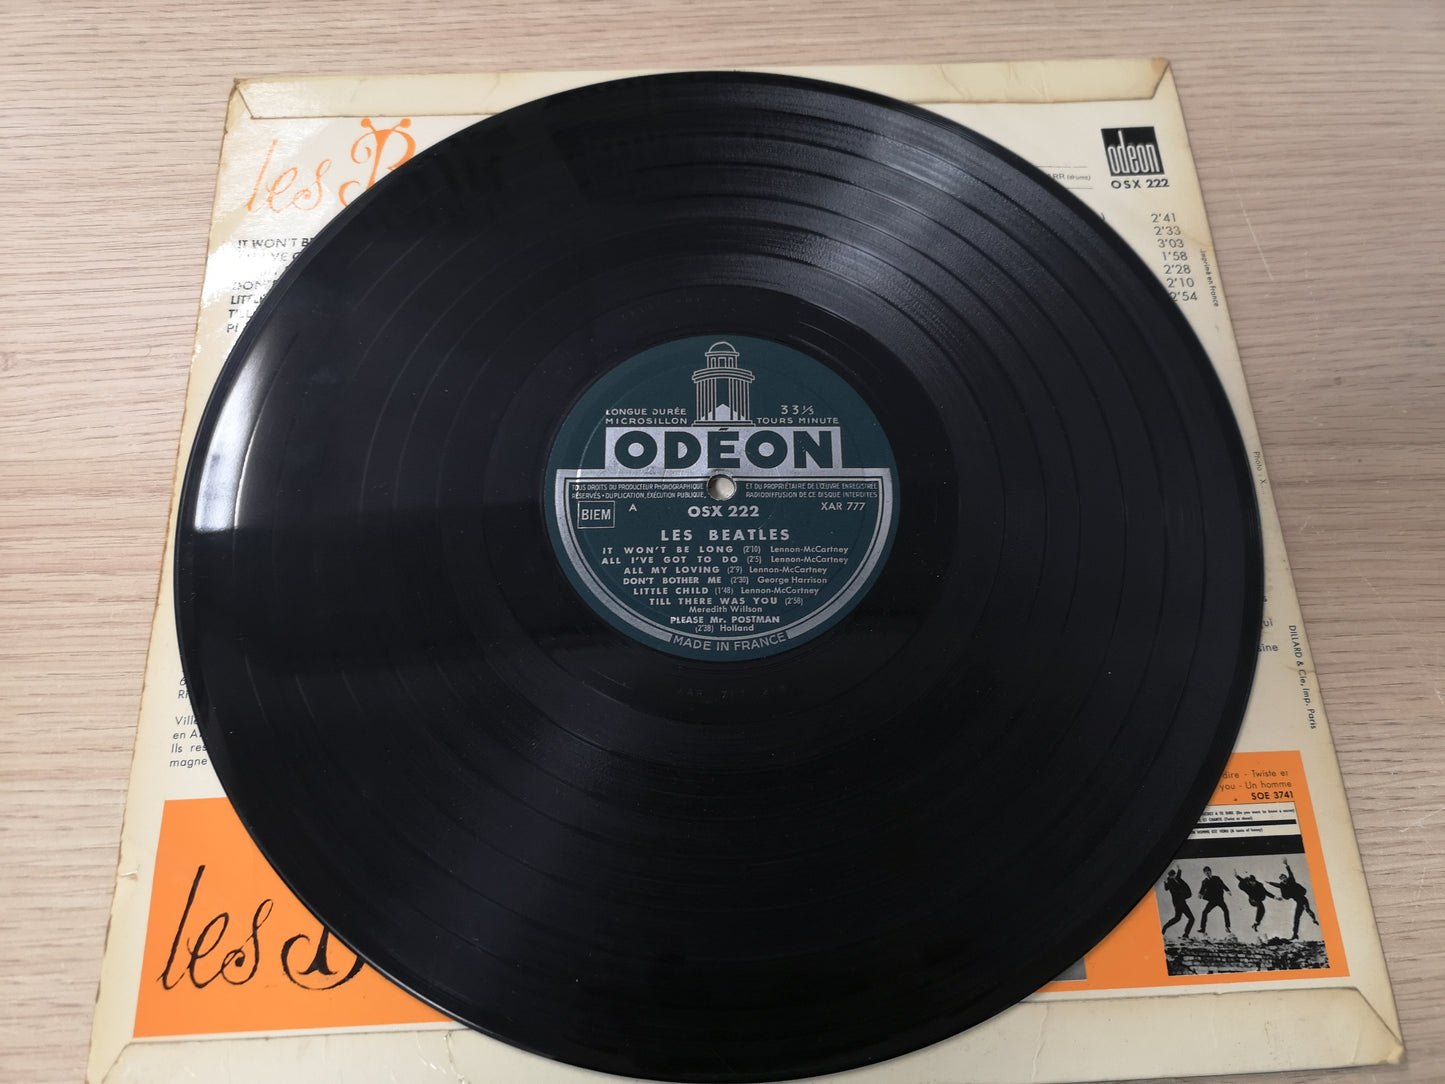 Beatles "S/T" Orig France OSX 222 1963 VG+/VG++